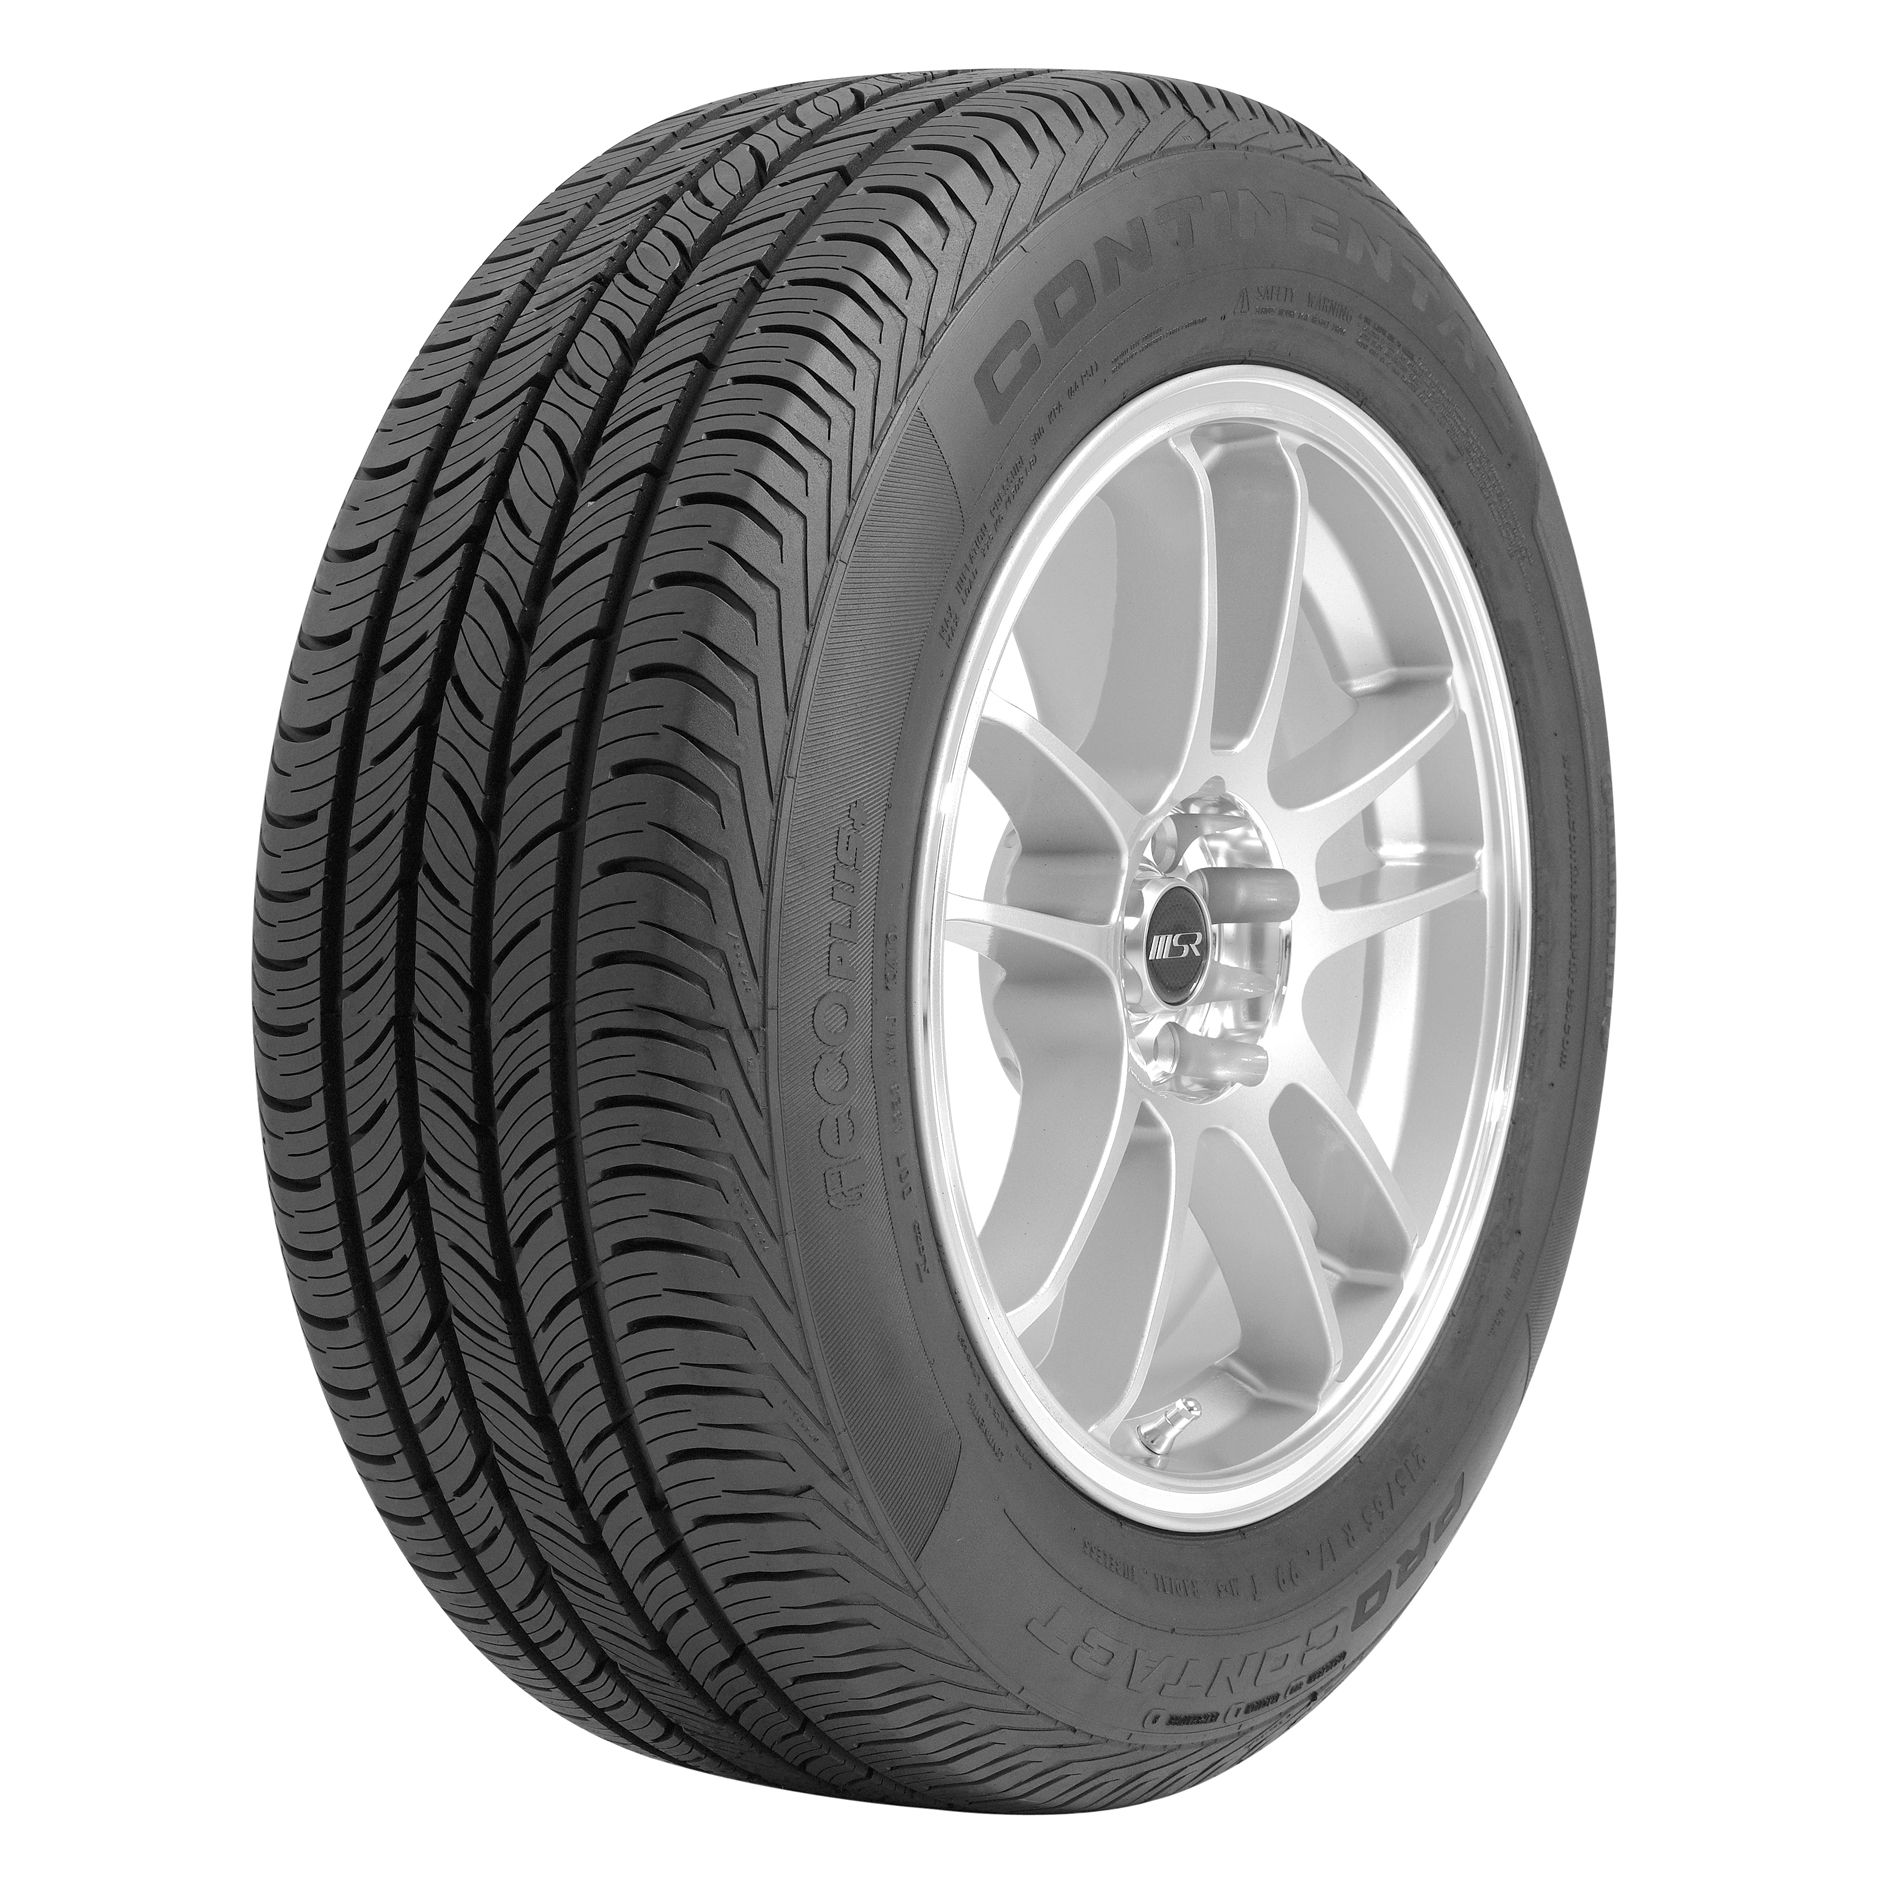 Continental Pro Contact Eco Plus - 215/65R16 98T BW - All-Season Tire